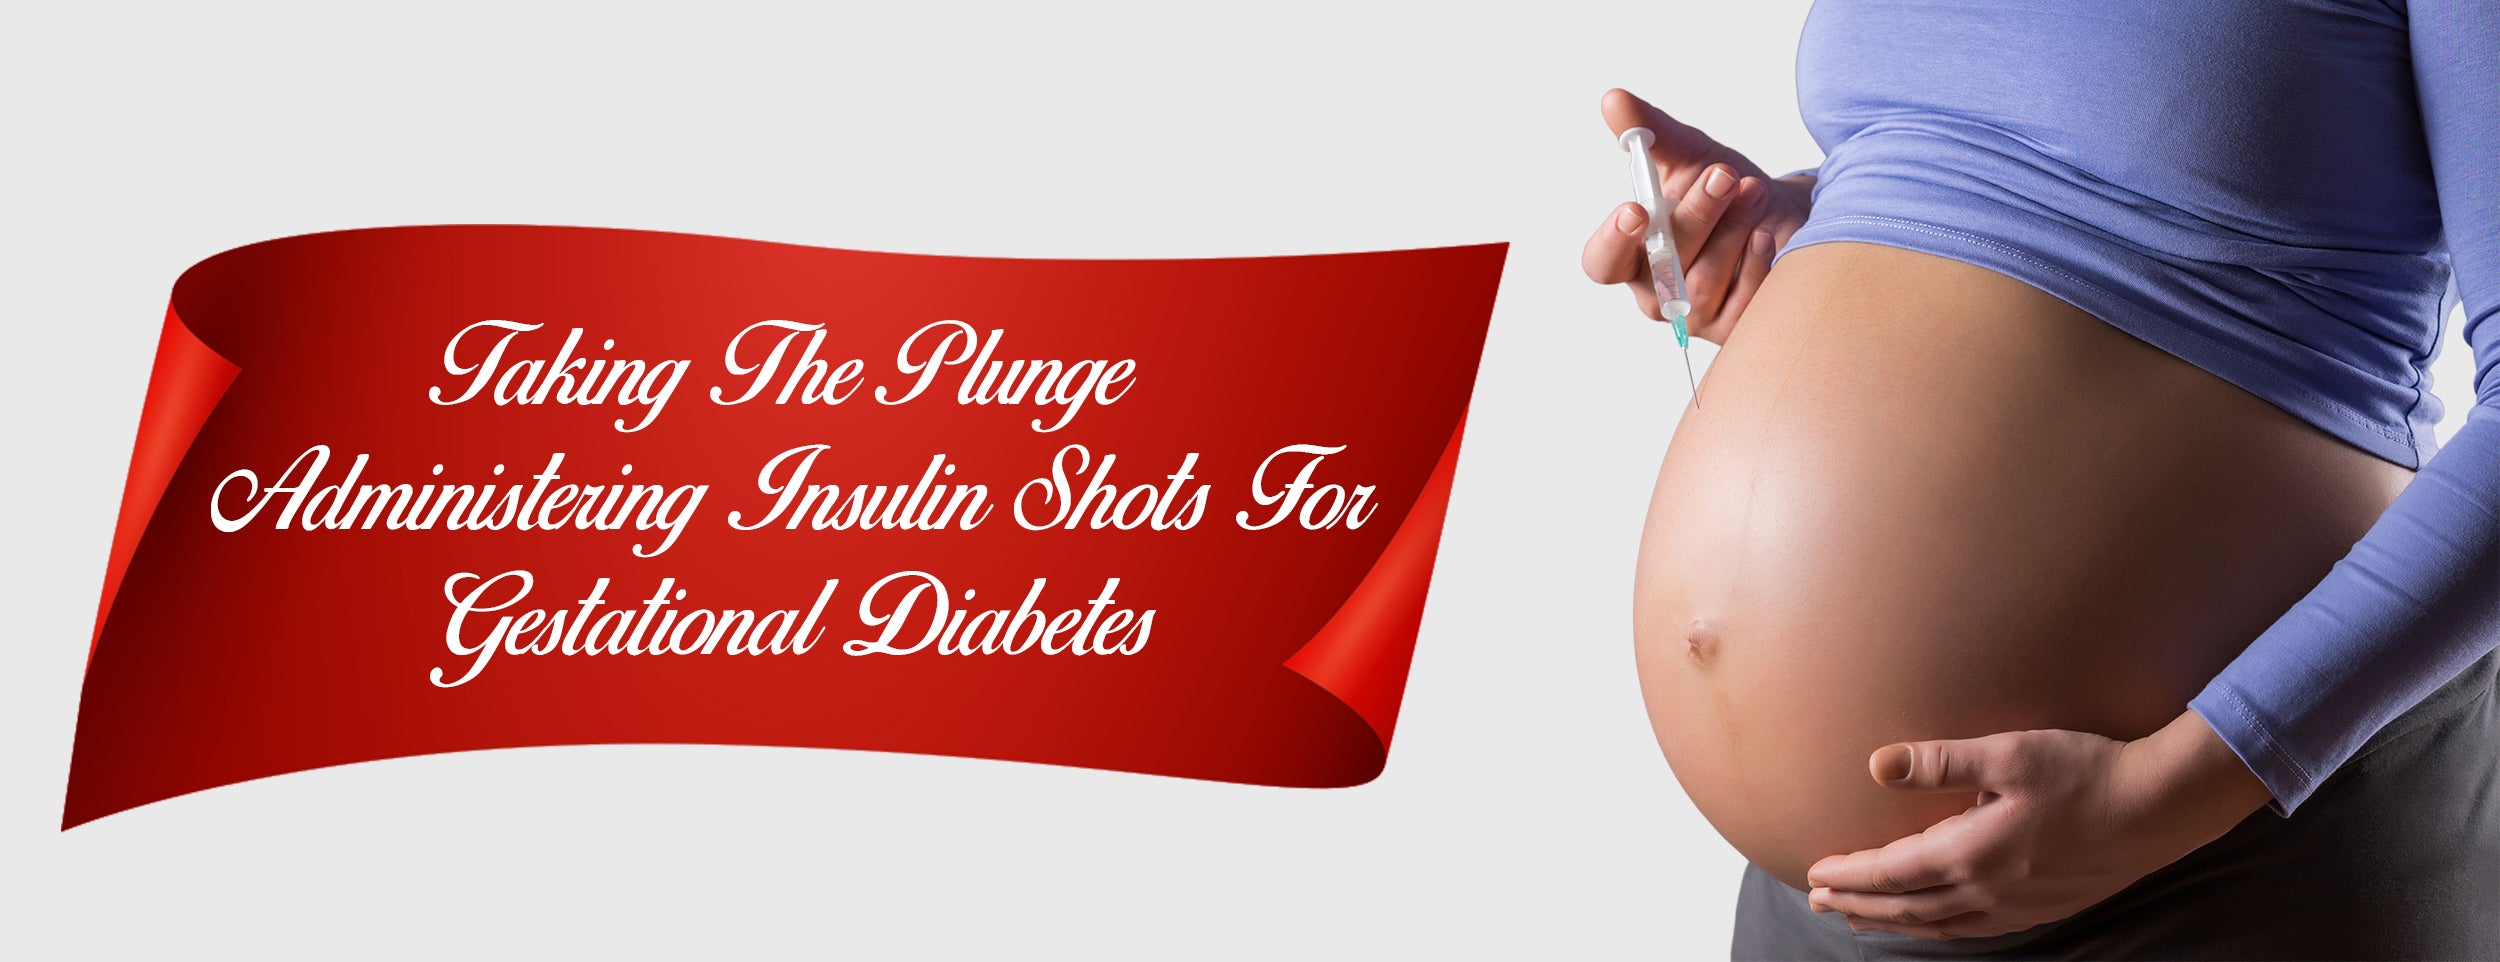 Anatomy of Gestational Diabetes Insulin Shots